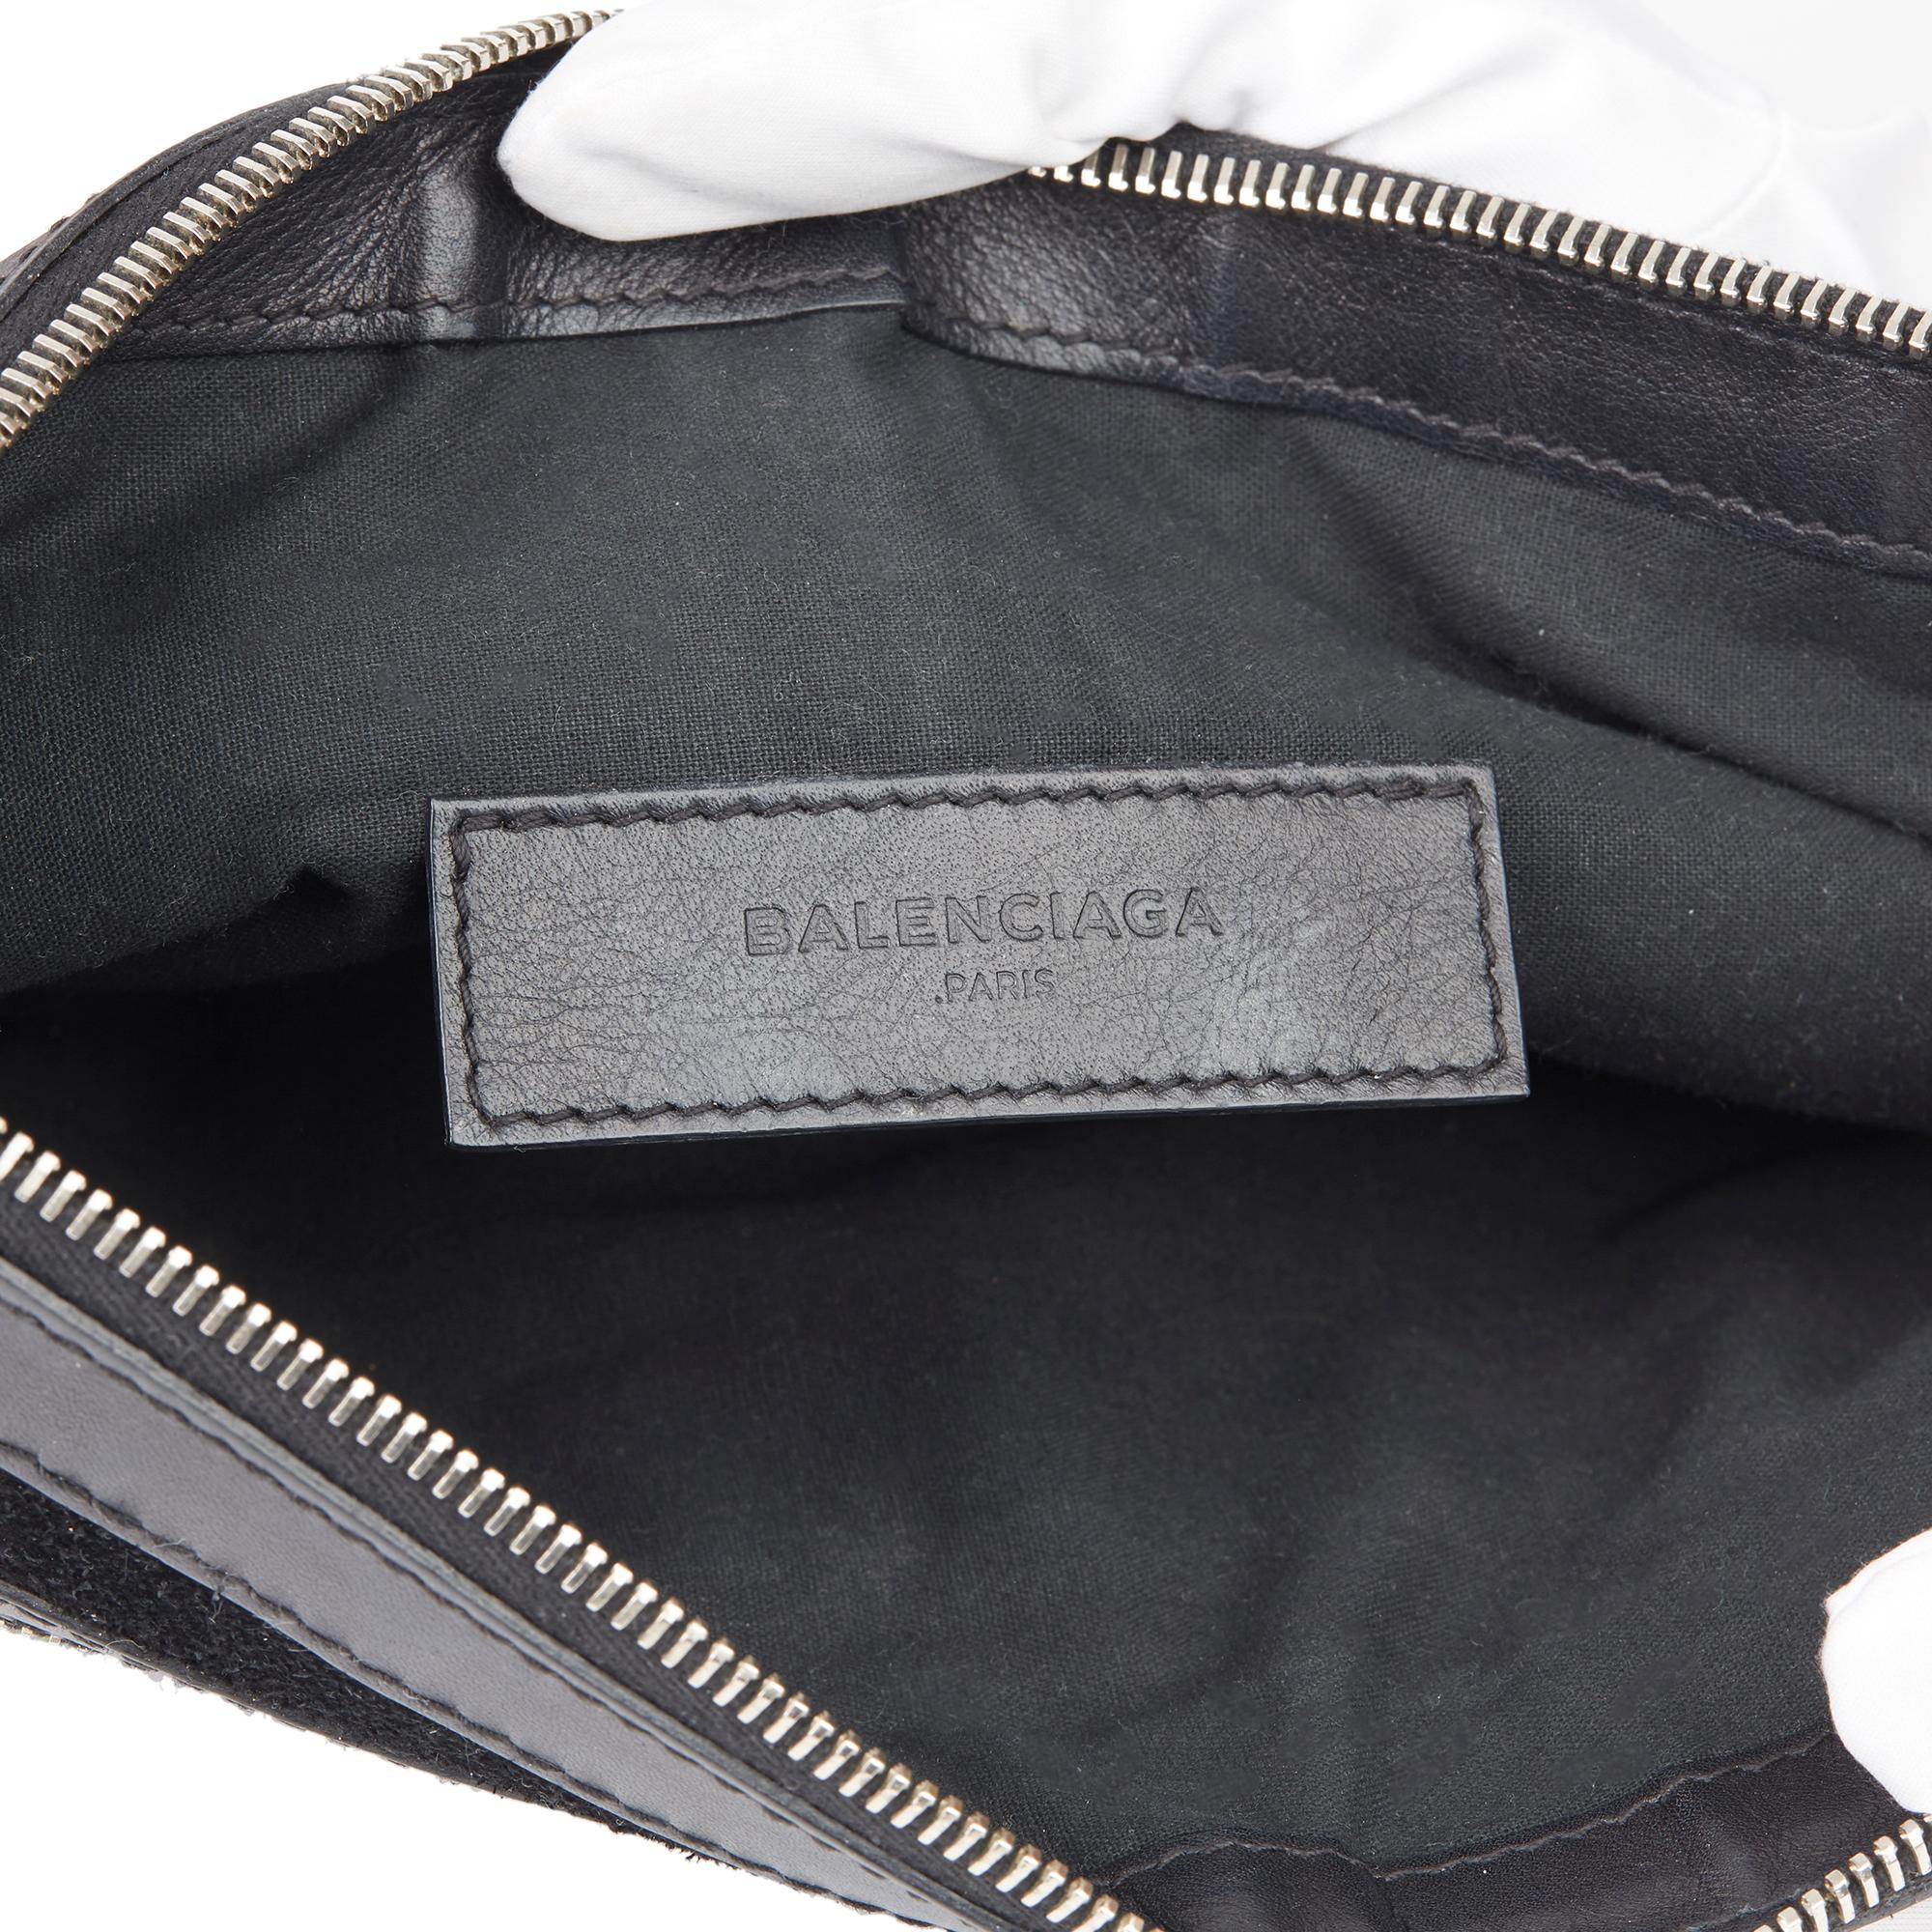 2010 Balenciaga Black Calfskin Leather & Suede City Pouch 4